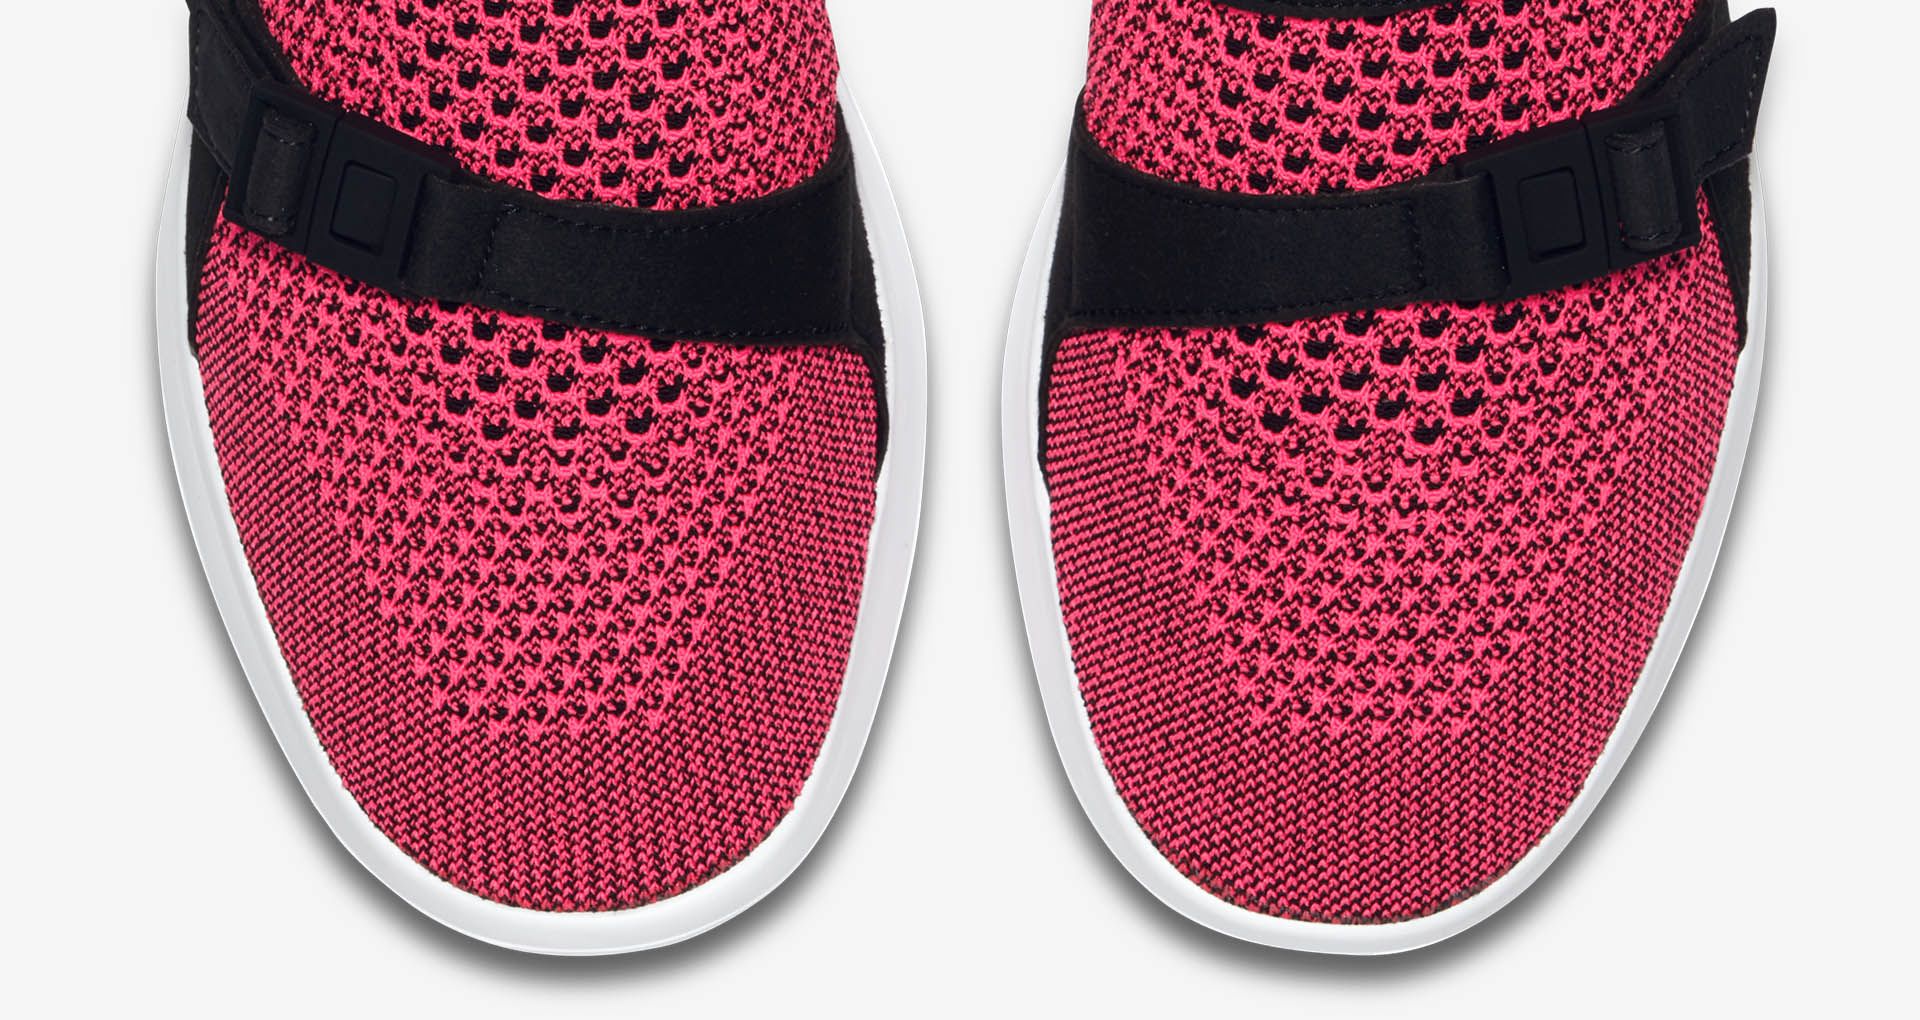 Women's Nike Air Sock Racer Ultra Flyknit 'Racer Pink & Black'. Nike SNKRS